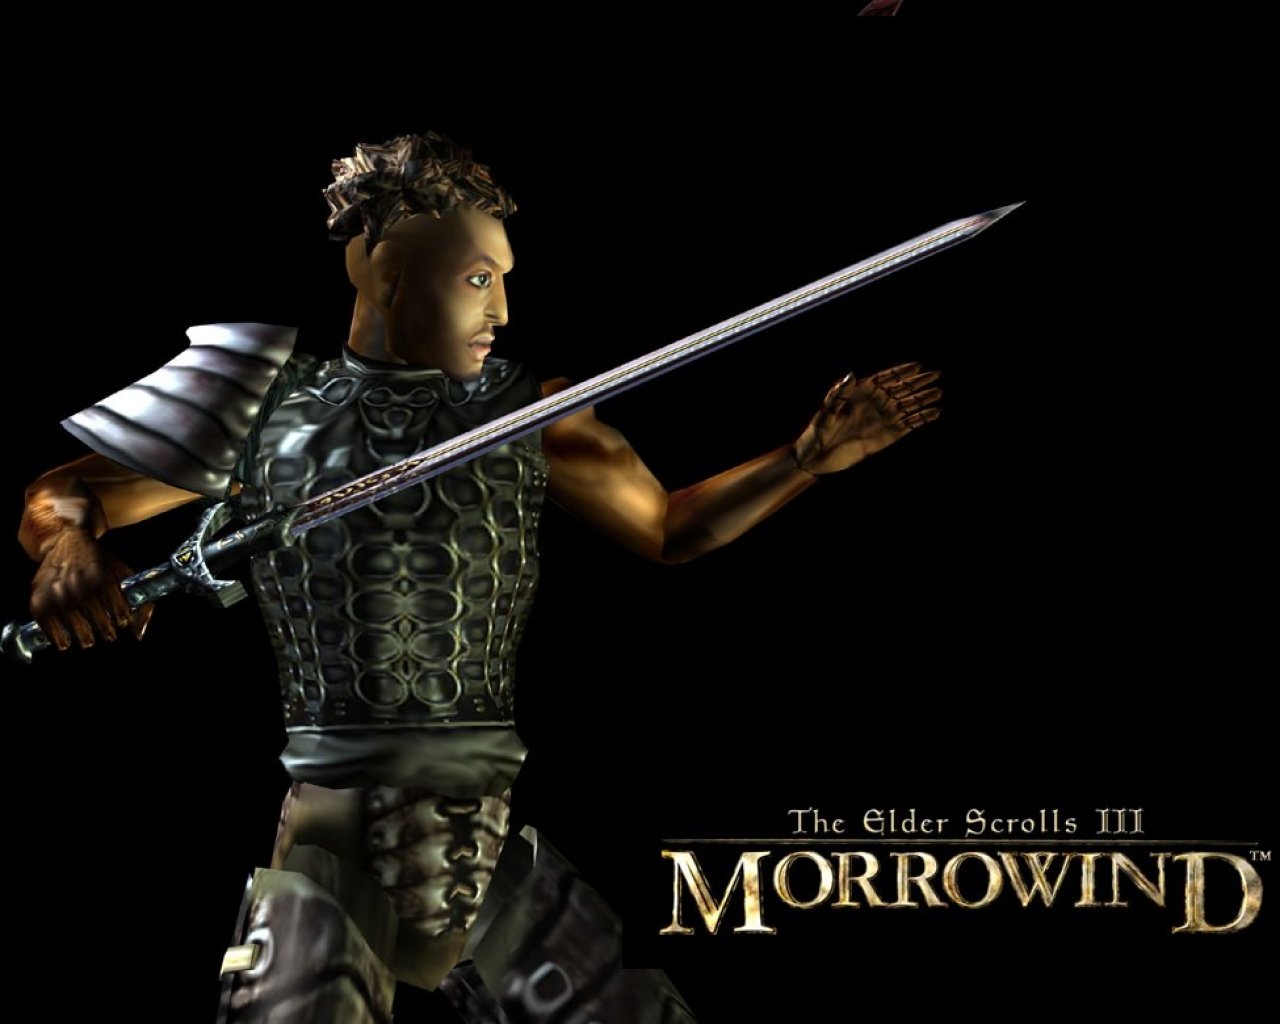 Wallpaper The Elder Scrolls III: Morrowind "Swordsman"